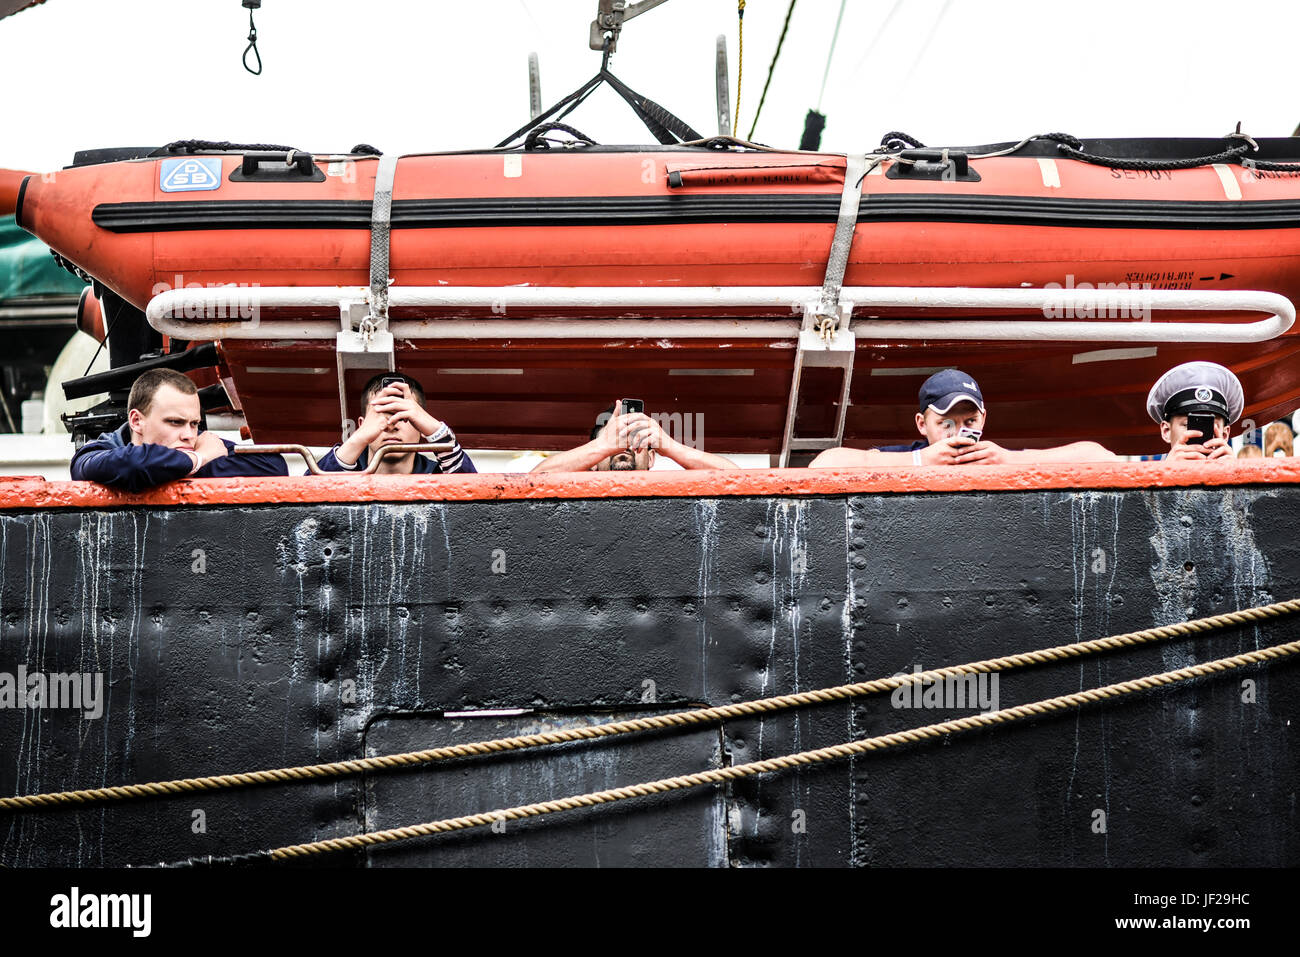 Szczecin, Poland, June 14, 2015: Sailors texting on a smartphones on a ship. Stock Photo